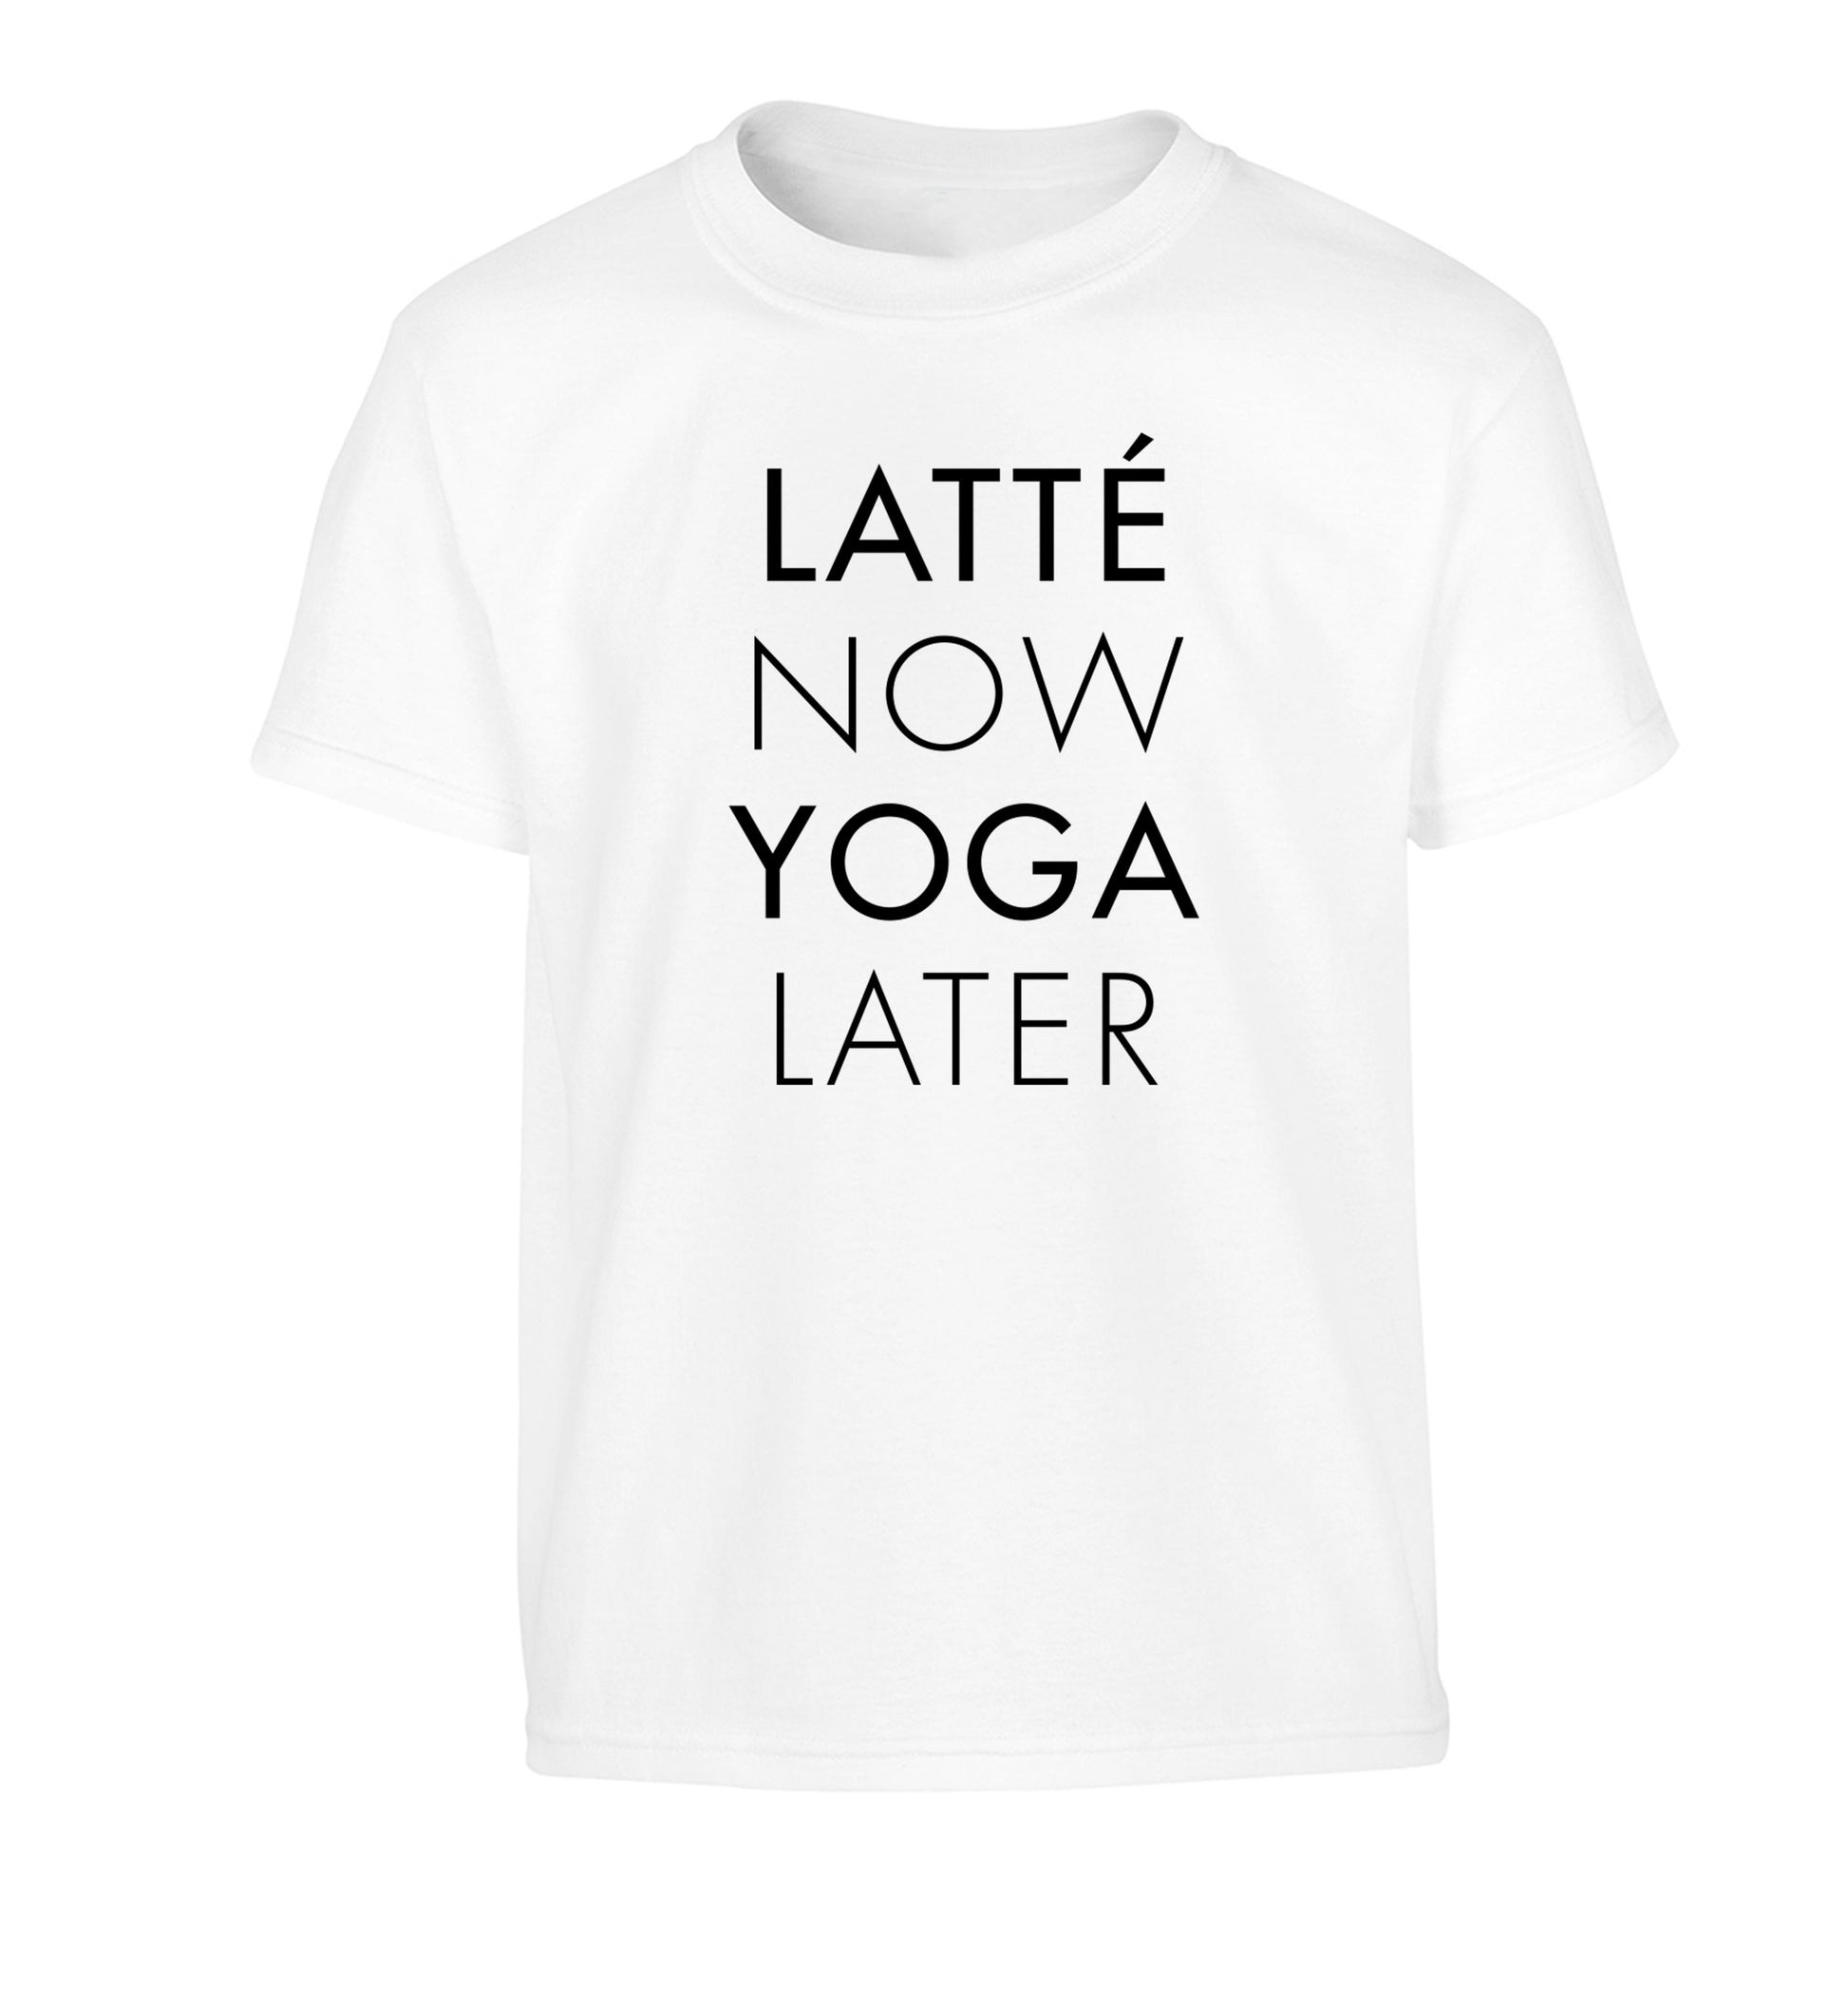 Latte now yoga later Children's white Tshirt 12-14 Years